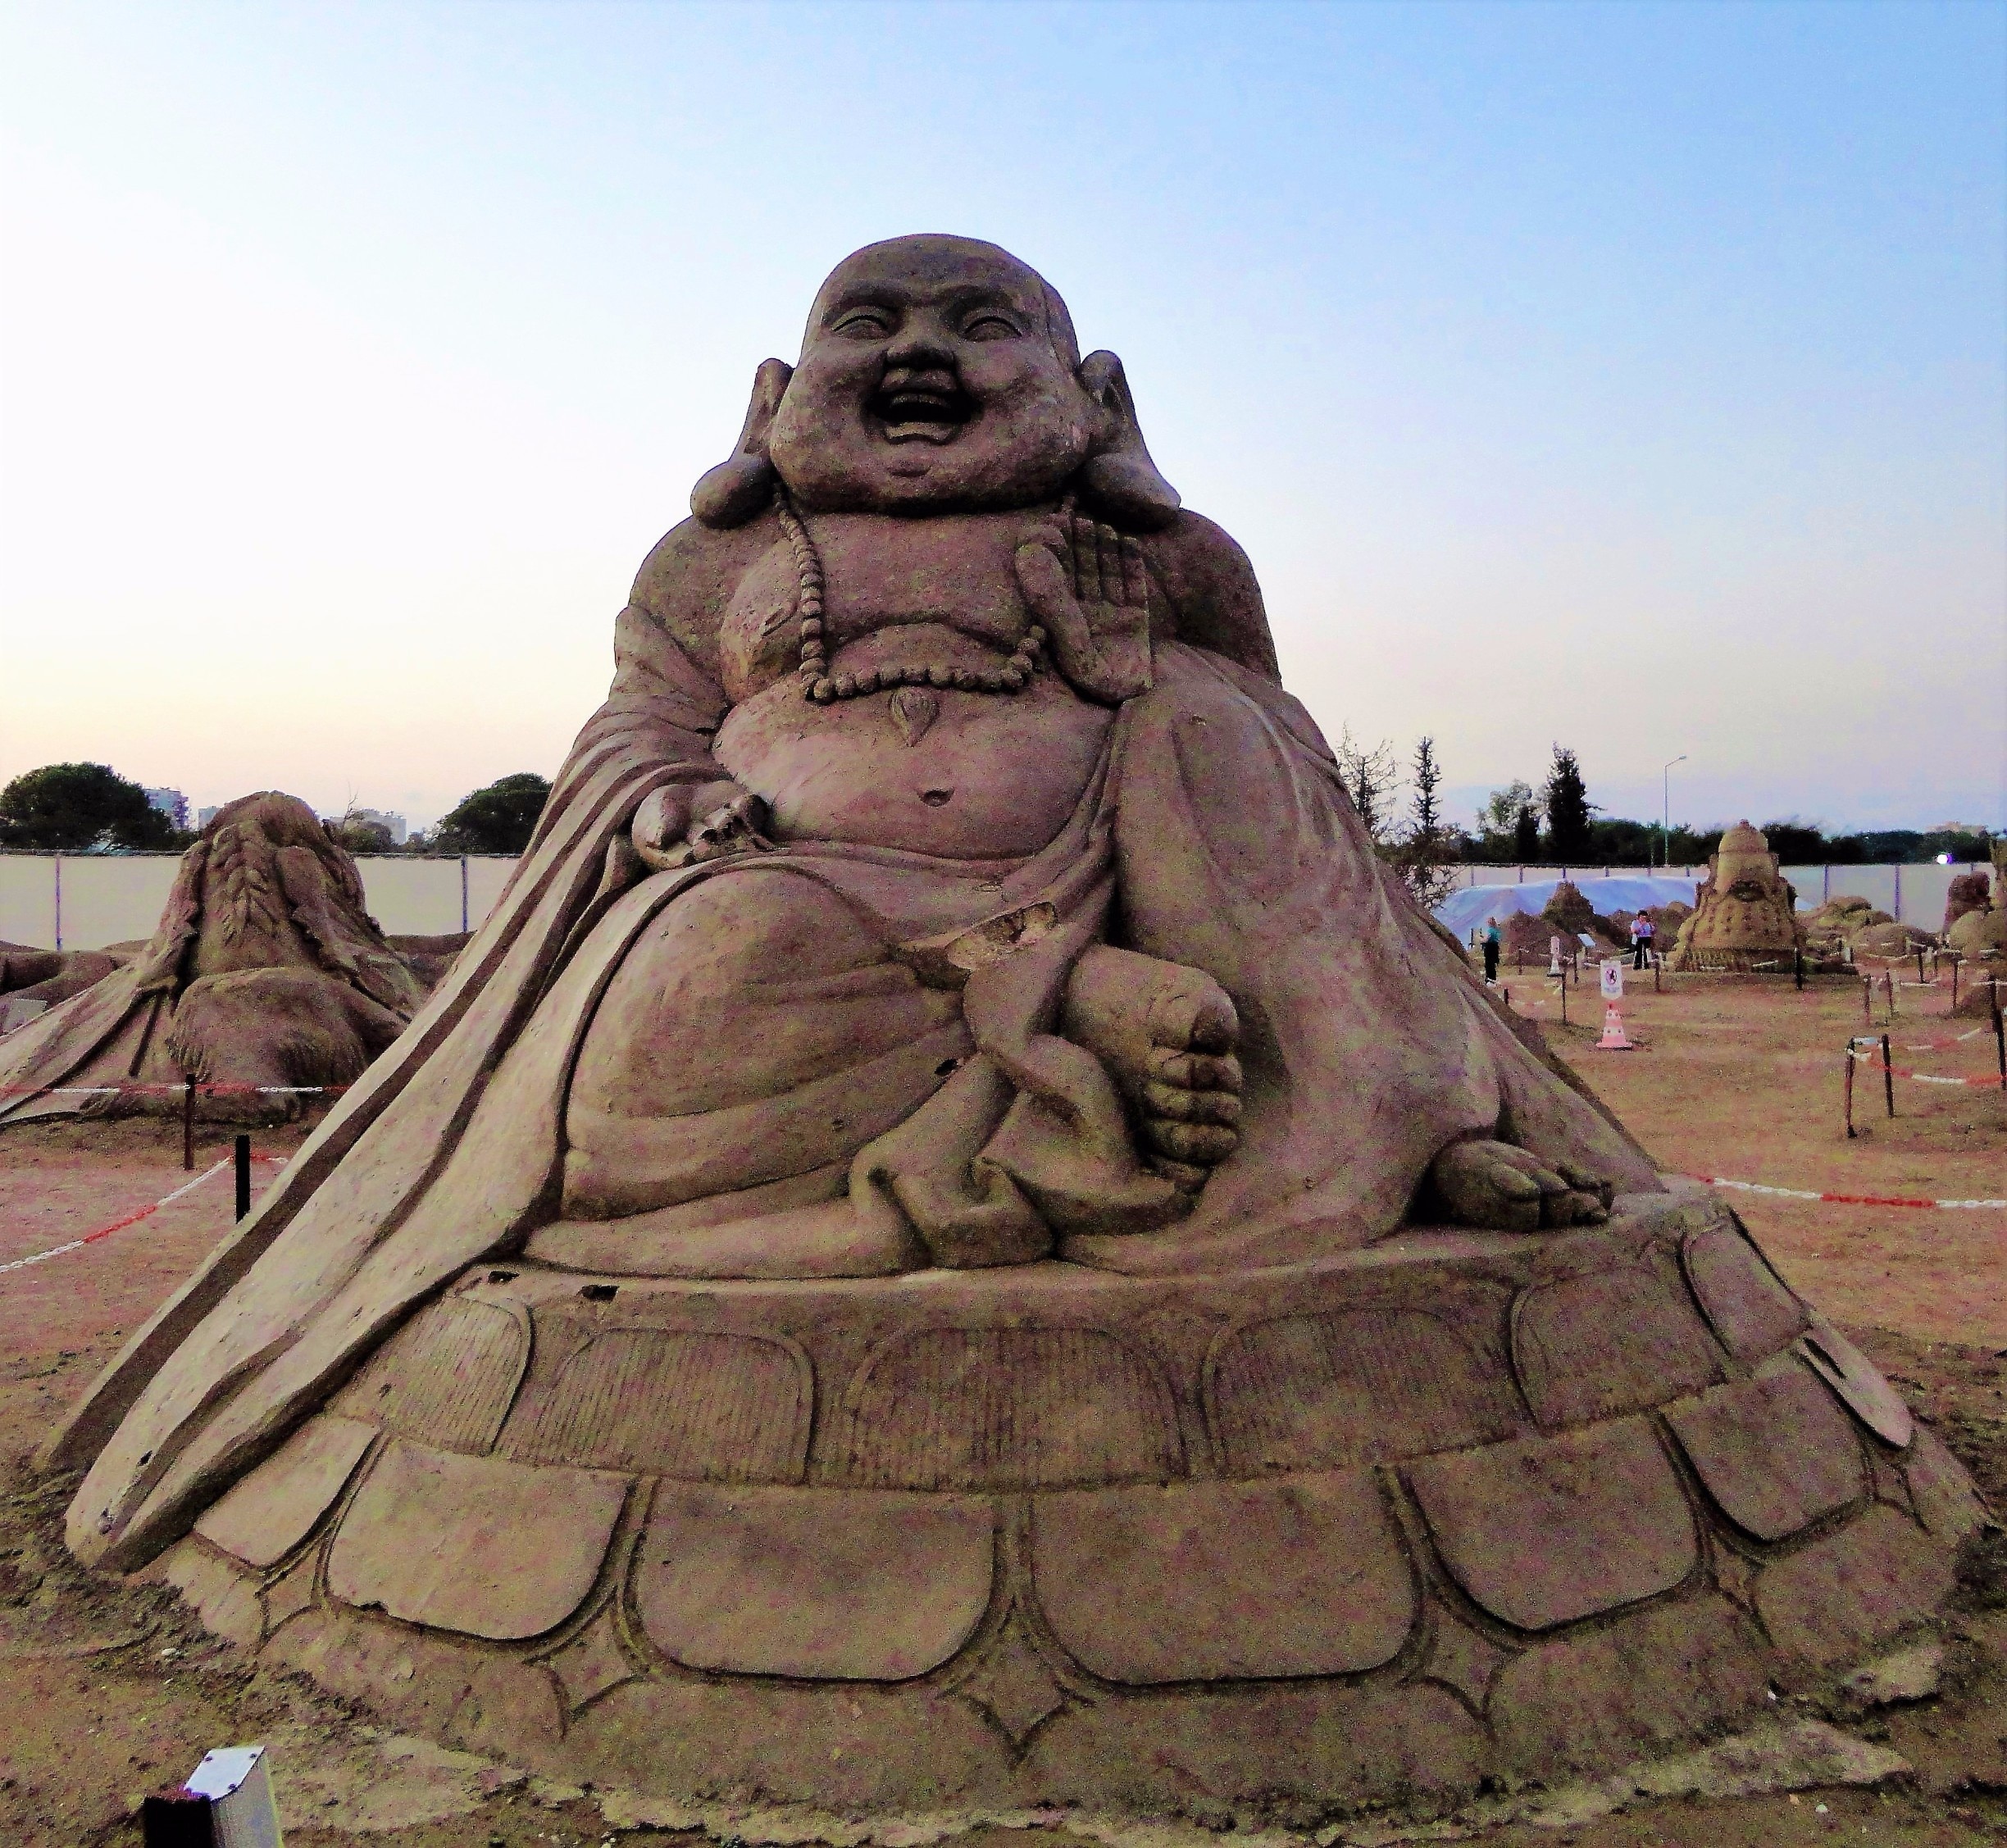 #LaughingBuddha, one of the many amazing sand sculptures at #Sandland in  #Antalya #Turkey.
#lifeatexpedia
#GoldenHour
